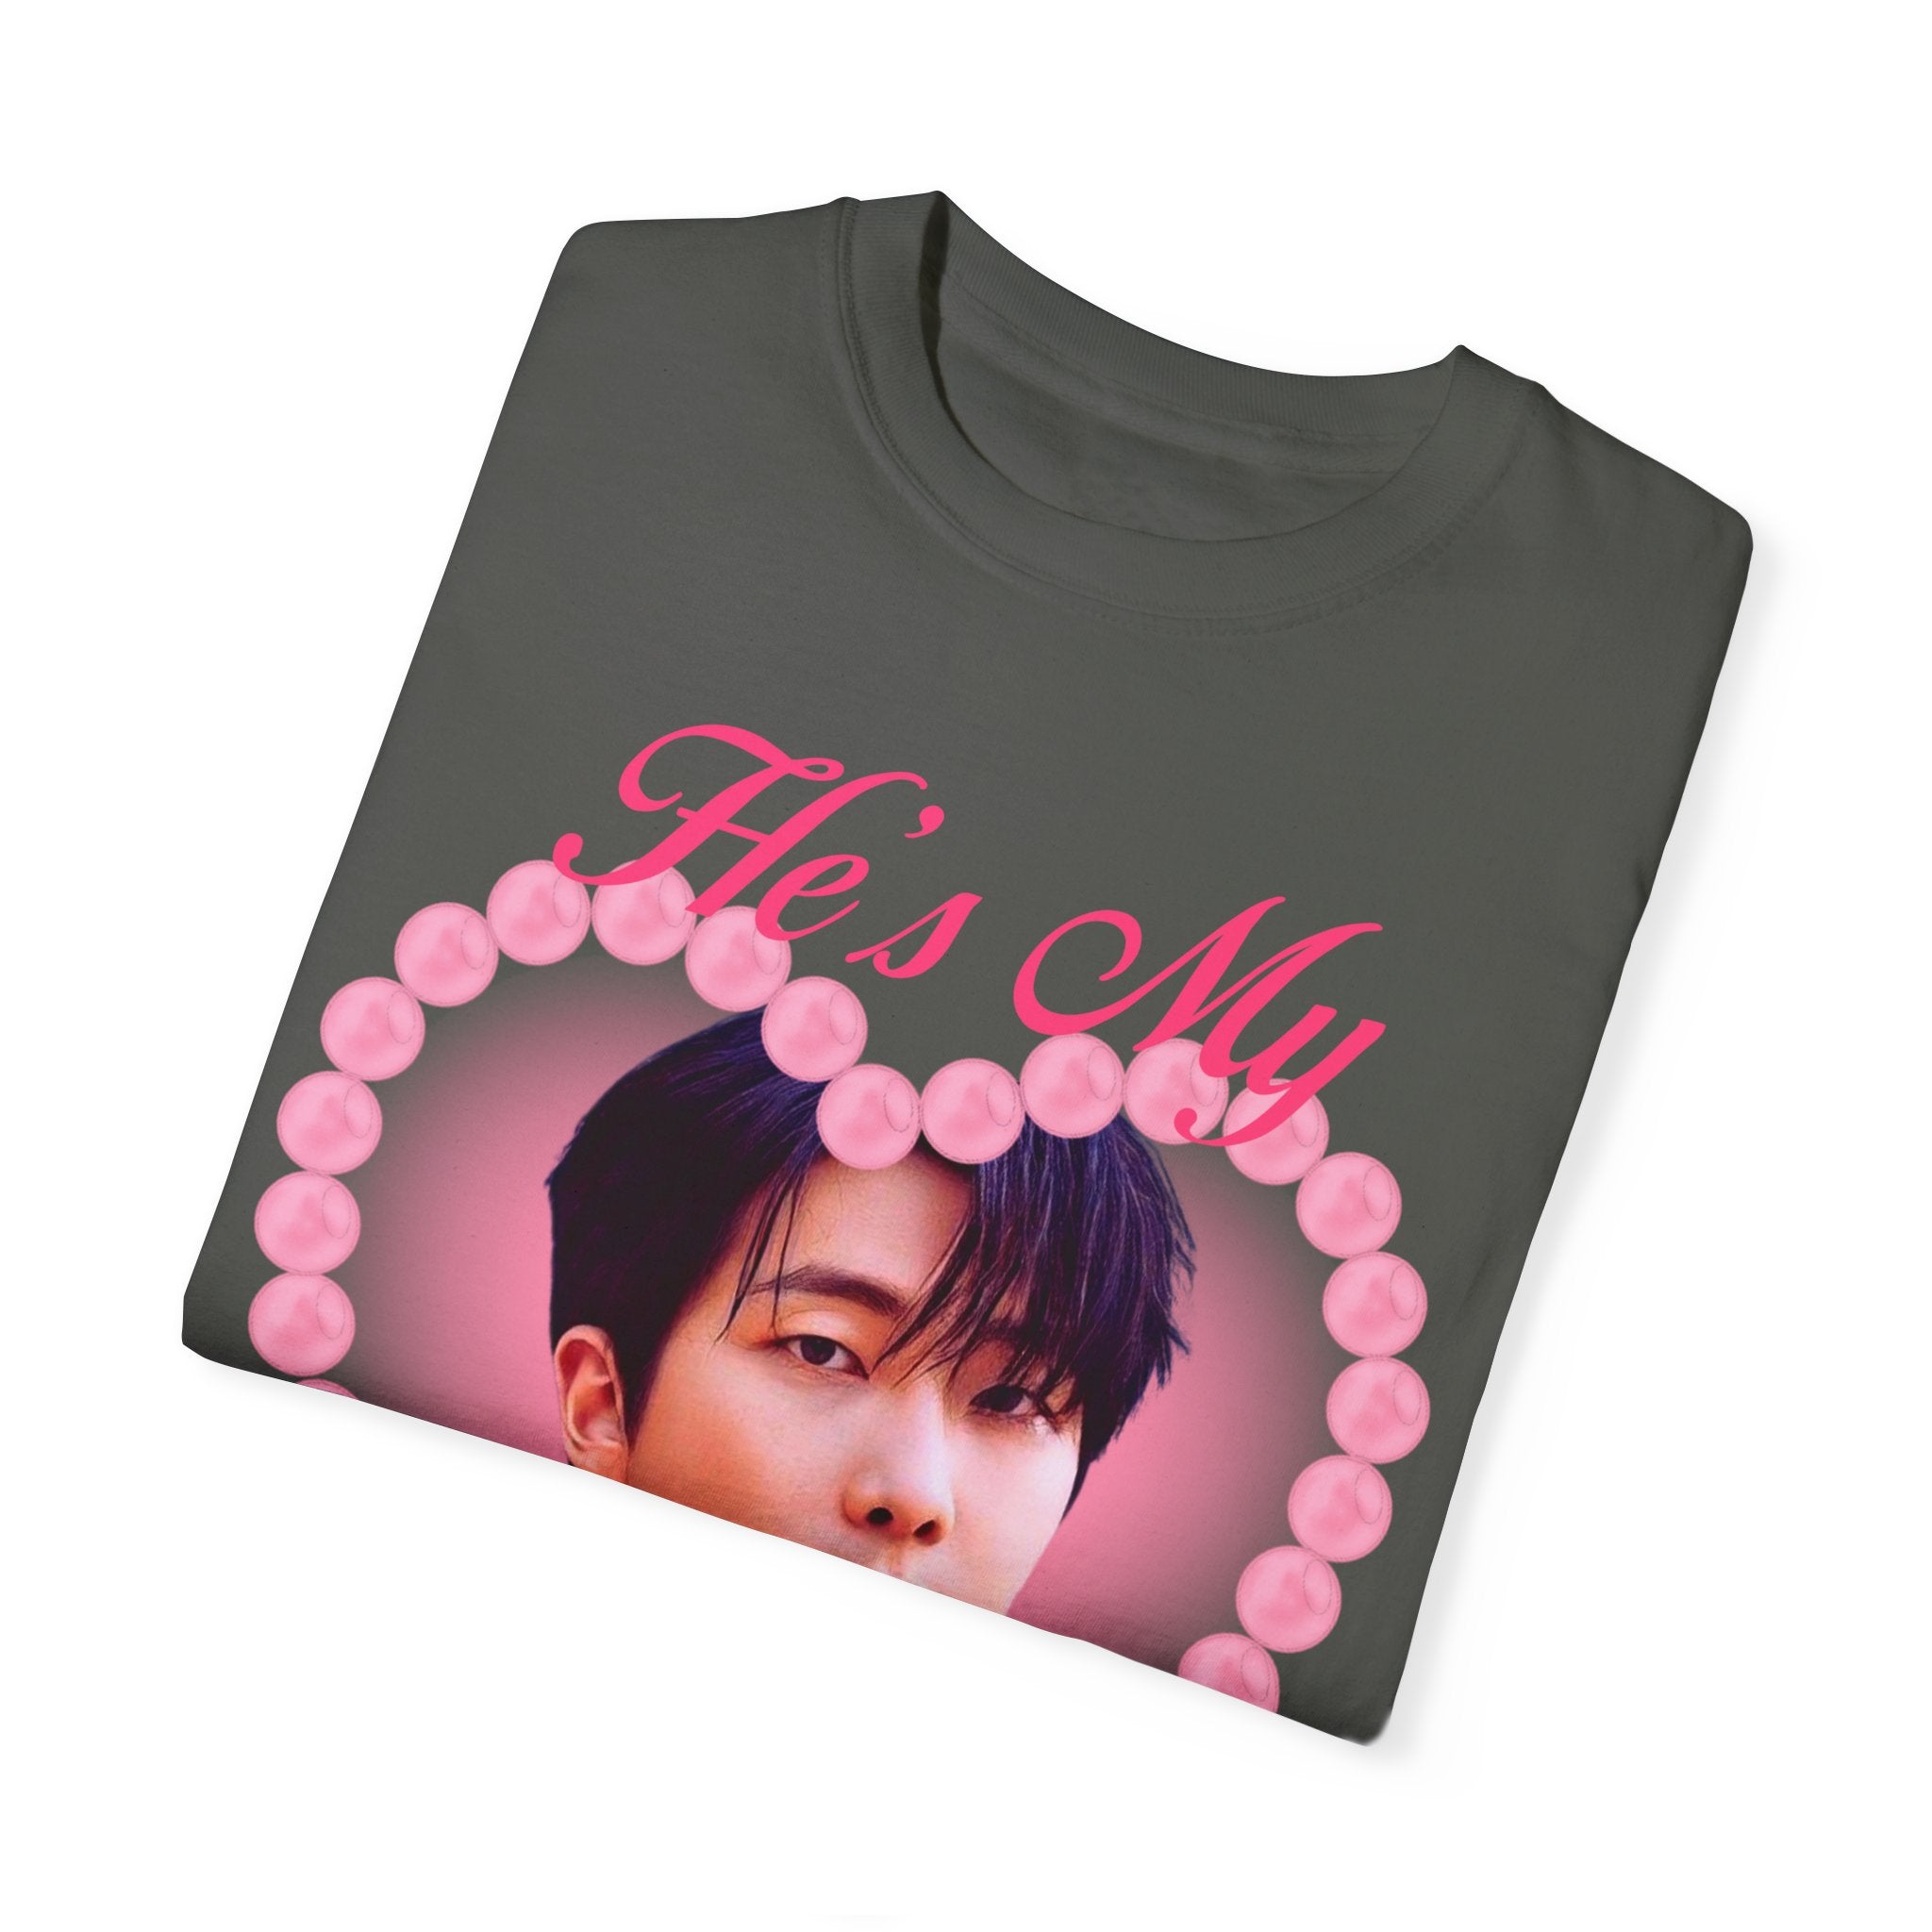 Namjoon Dream Boy Unisex Garment-Dyed T-shirt